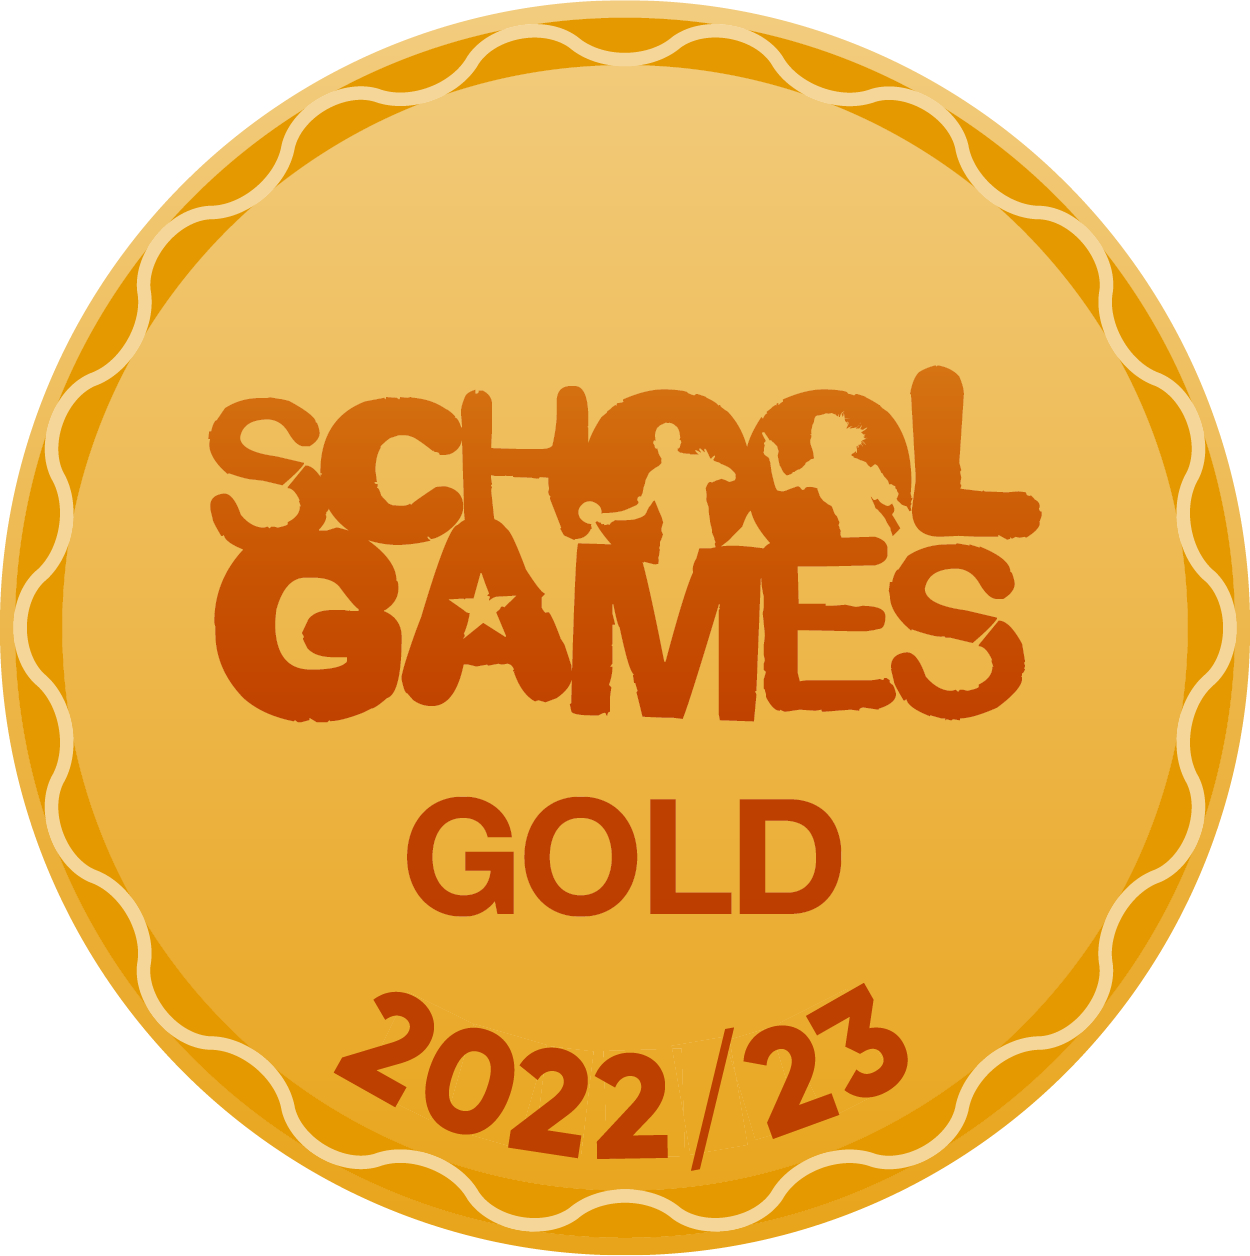 GOLD SPORT AWARD 2022-2023